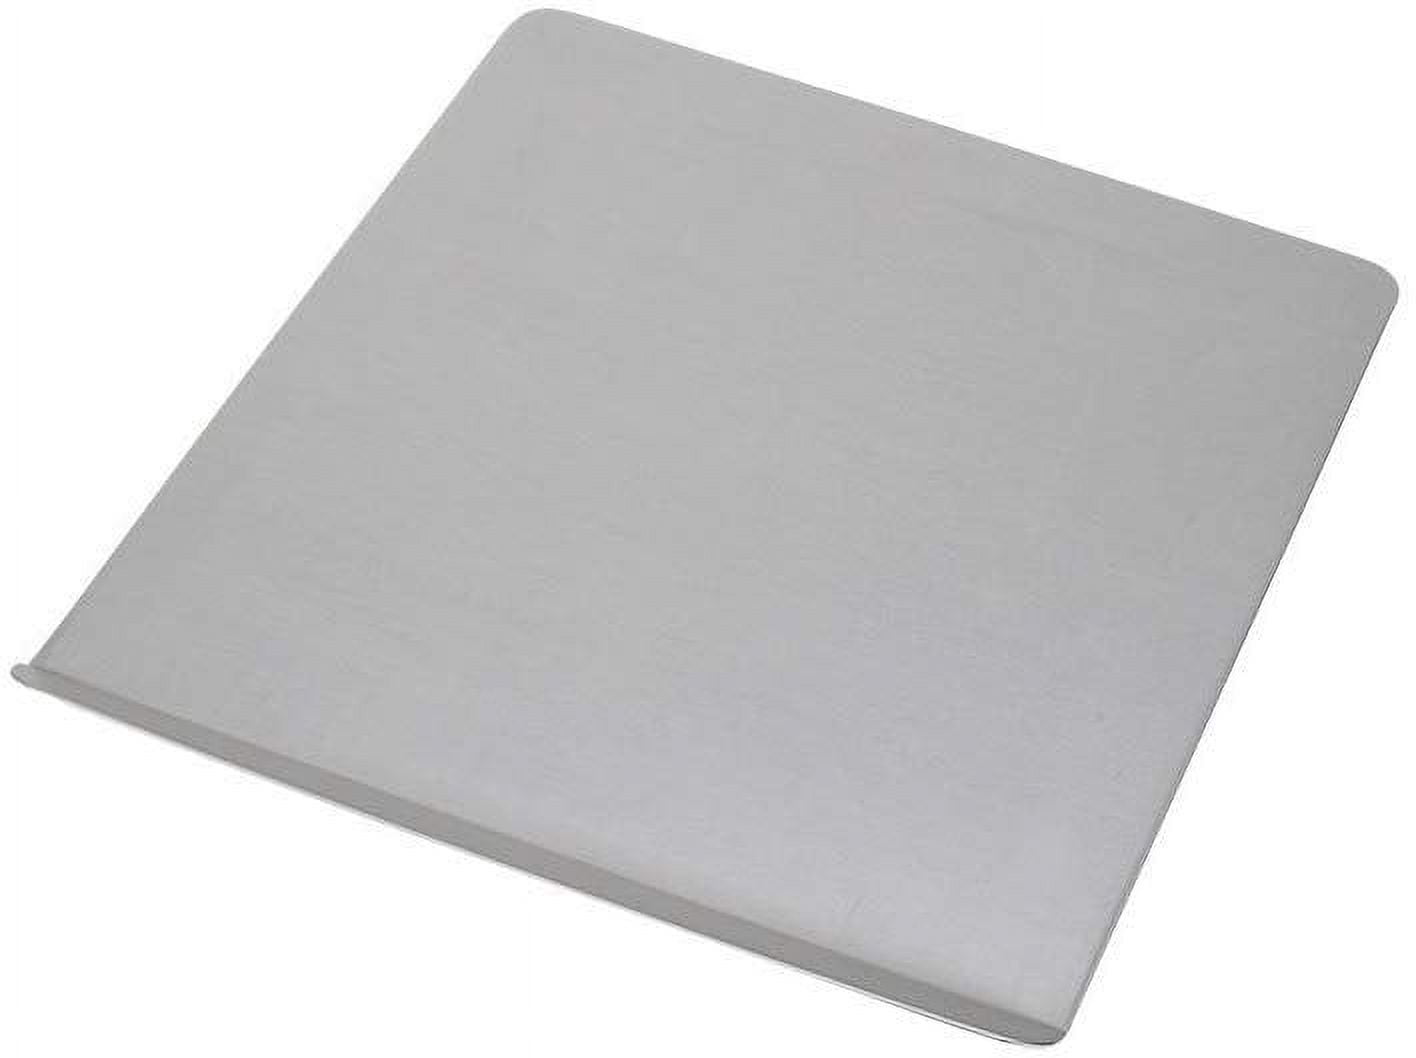 T-fal AirBake 08602PA Natural Insulated Medium Baking Sheet, 12 x 14 -  Bed Bath & Beyond - 13207947